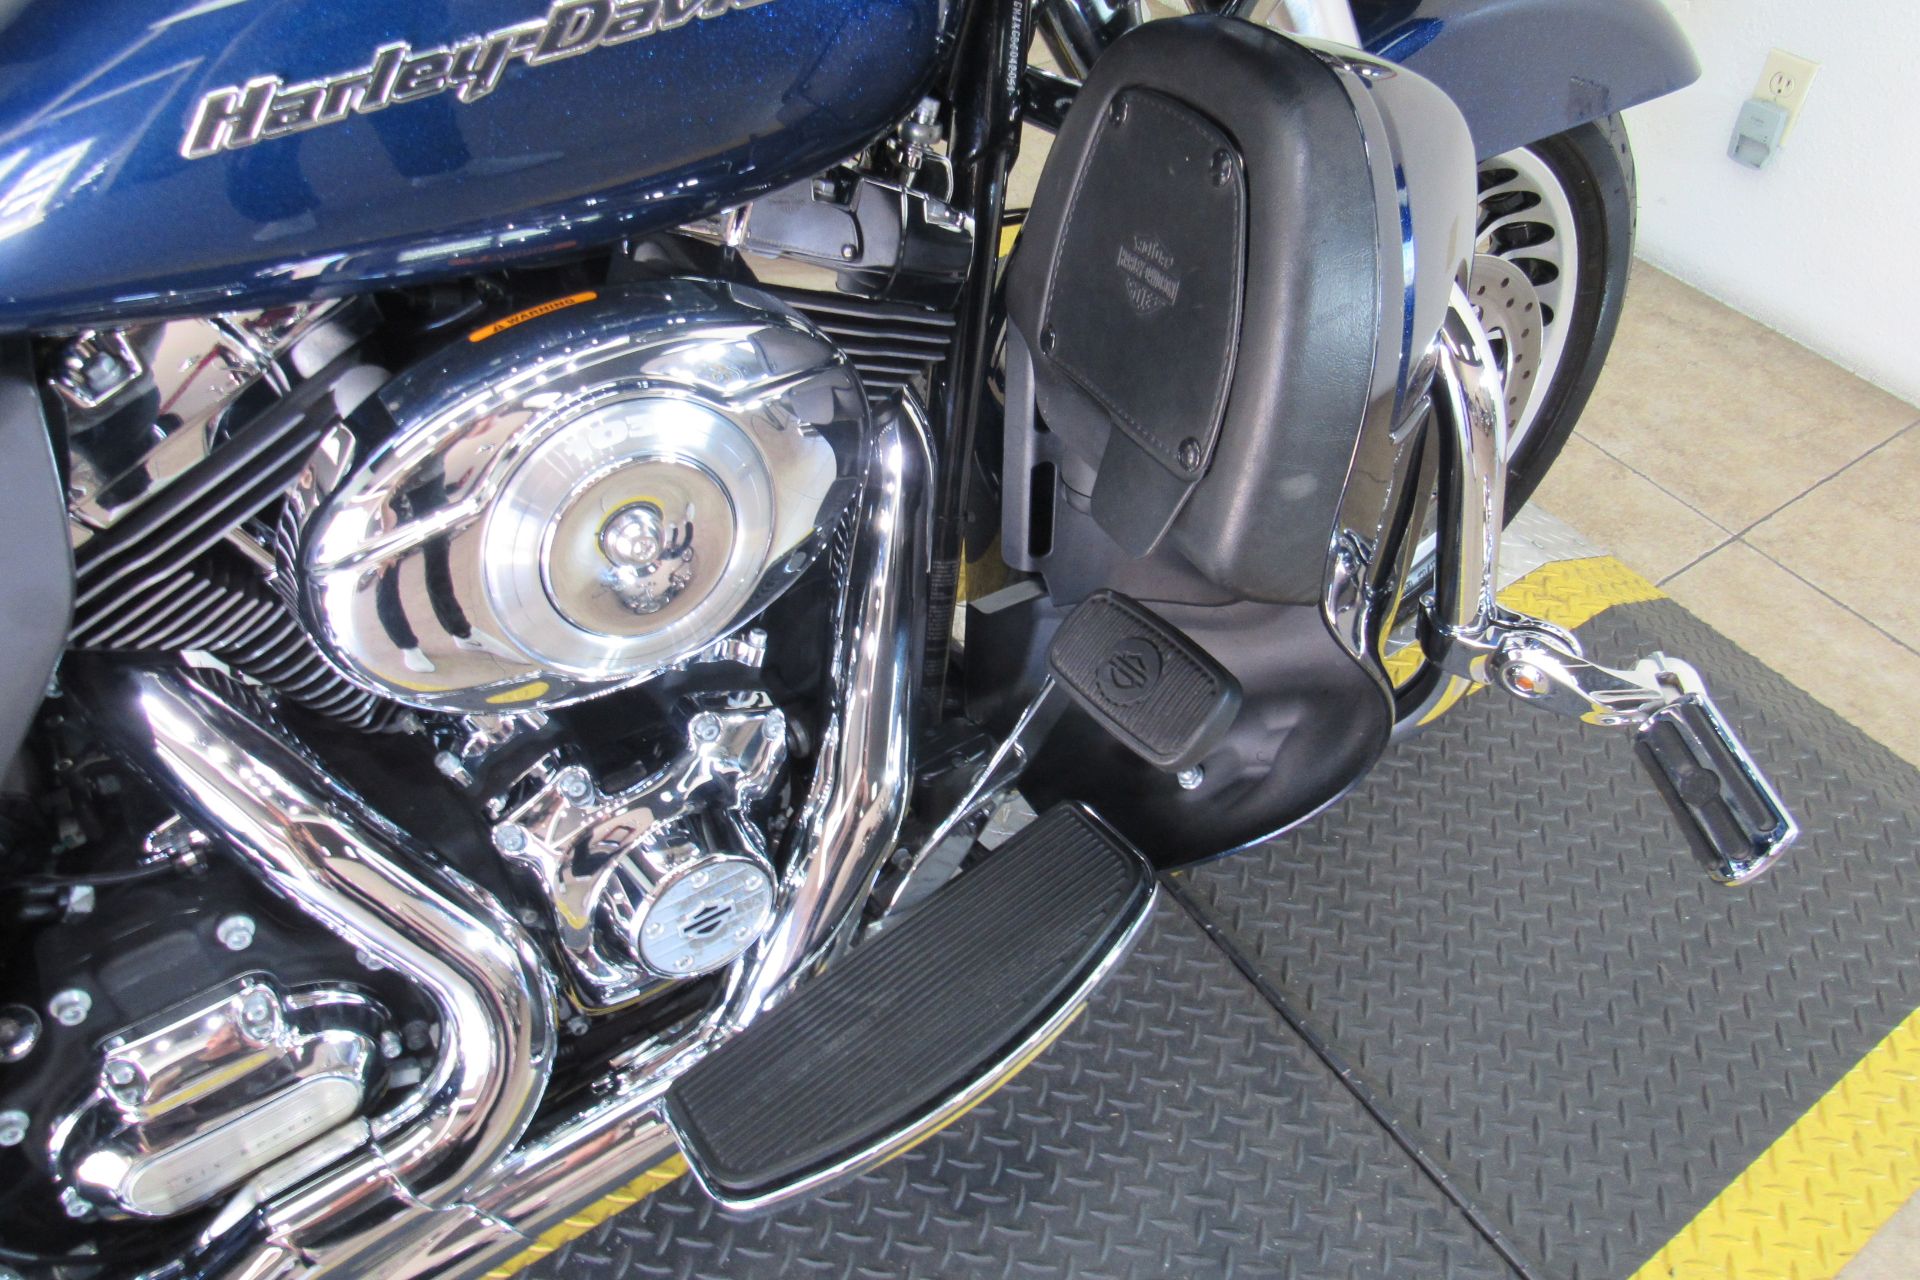 2012 Harley-Davidson Road Glide® Ultra in Temecula, California - Photo 19